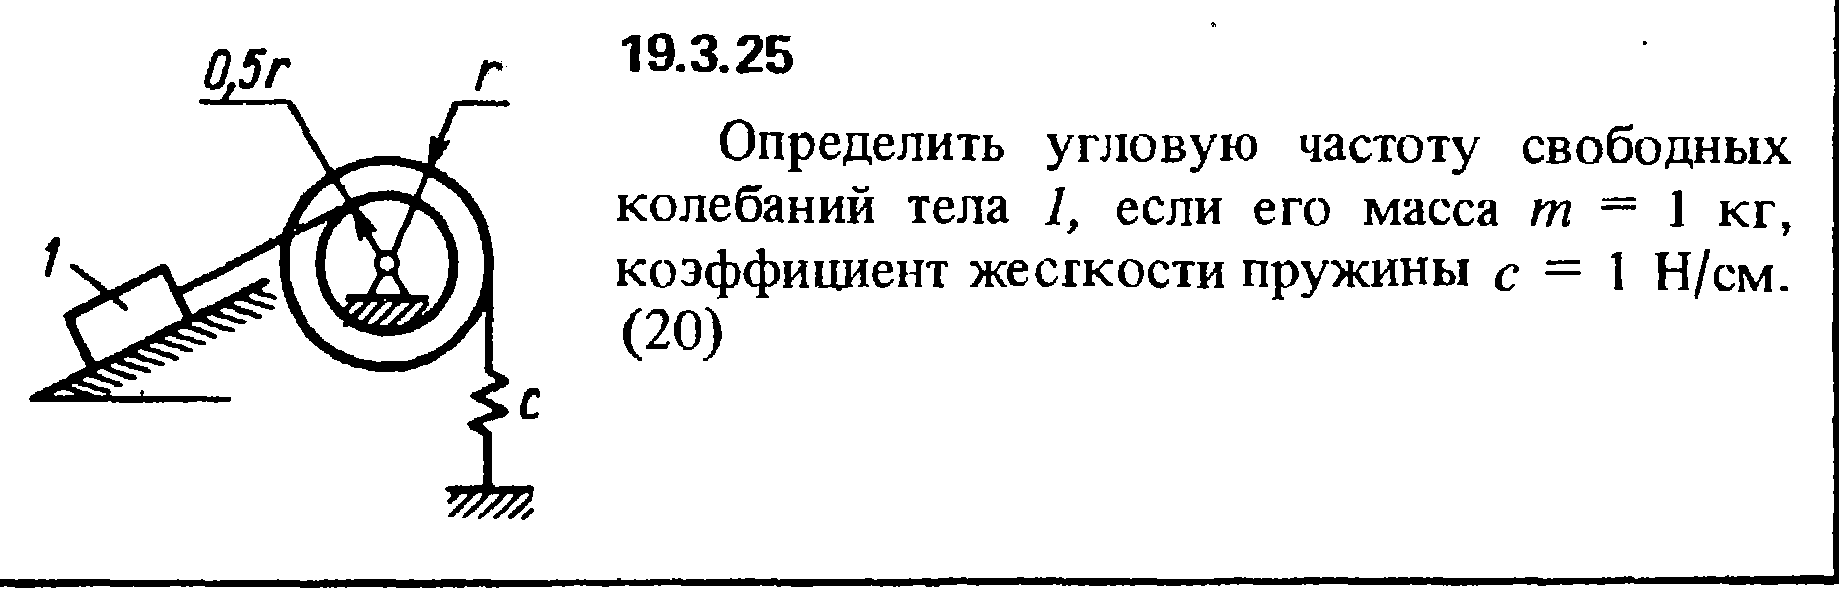 Решение 19.3.25 из сборника (решебника) Кепе О.Е. 1989